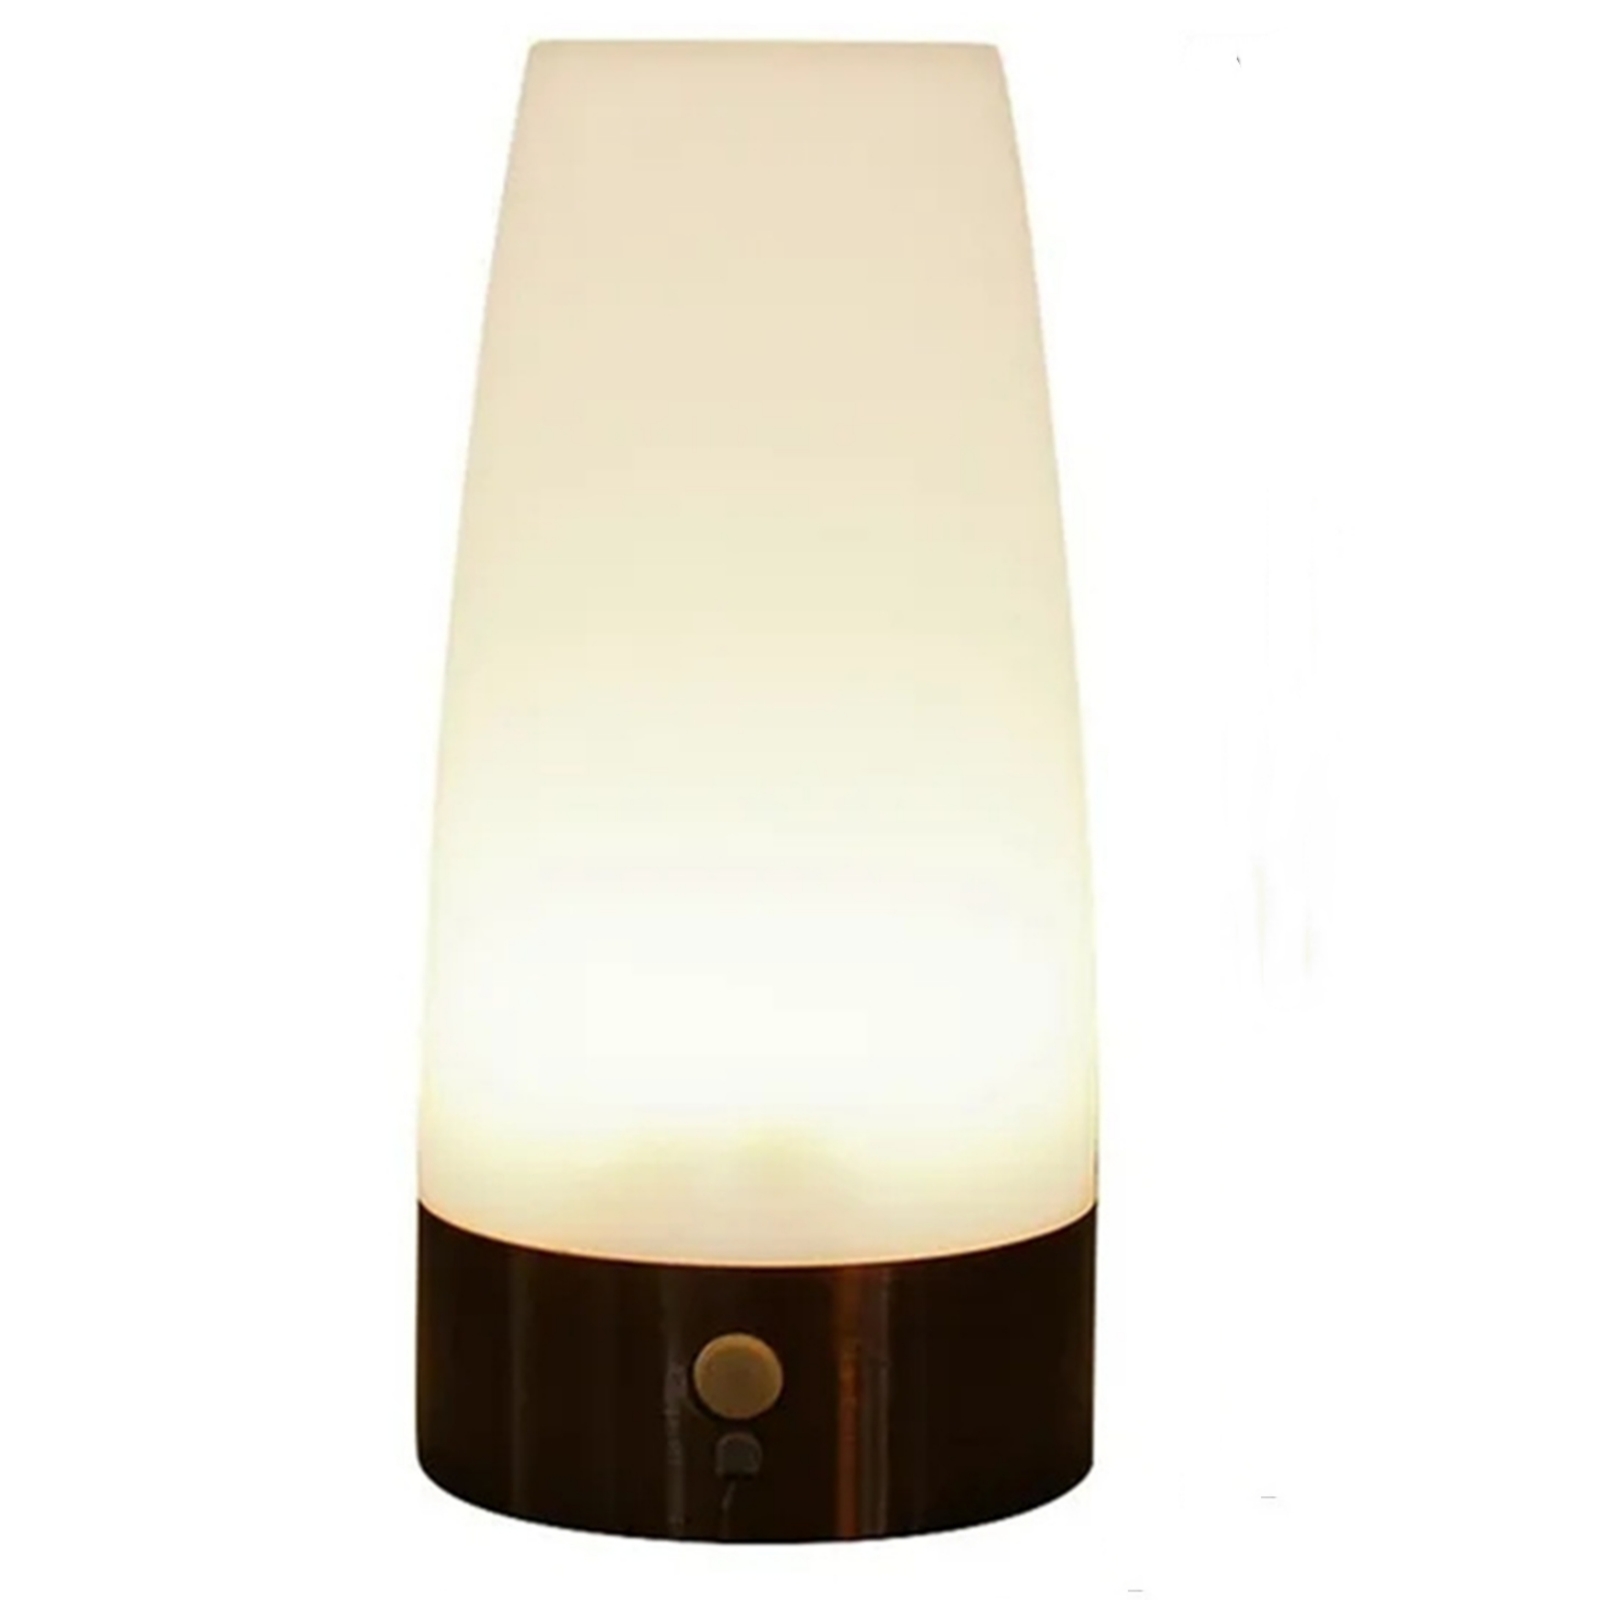 Wireless PIR Motion Sensor LED Night Light Battery Operated Table Lamp Smart Bedside Lamp For Home Decor Bedroom Bathroom